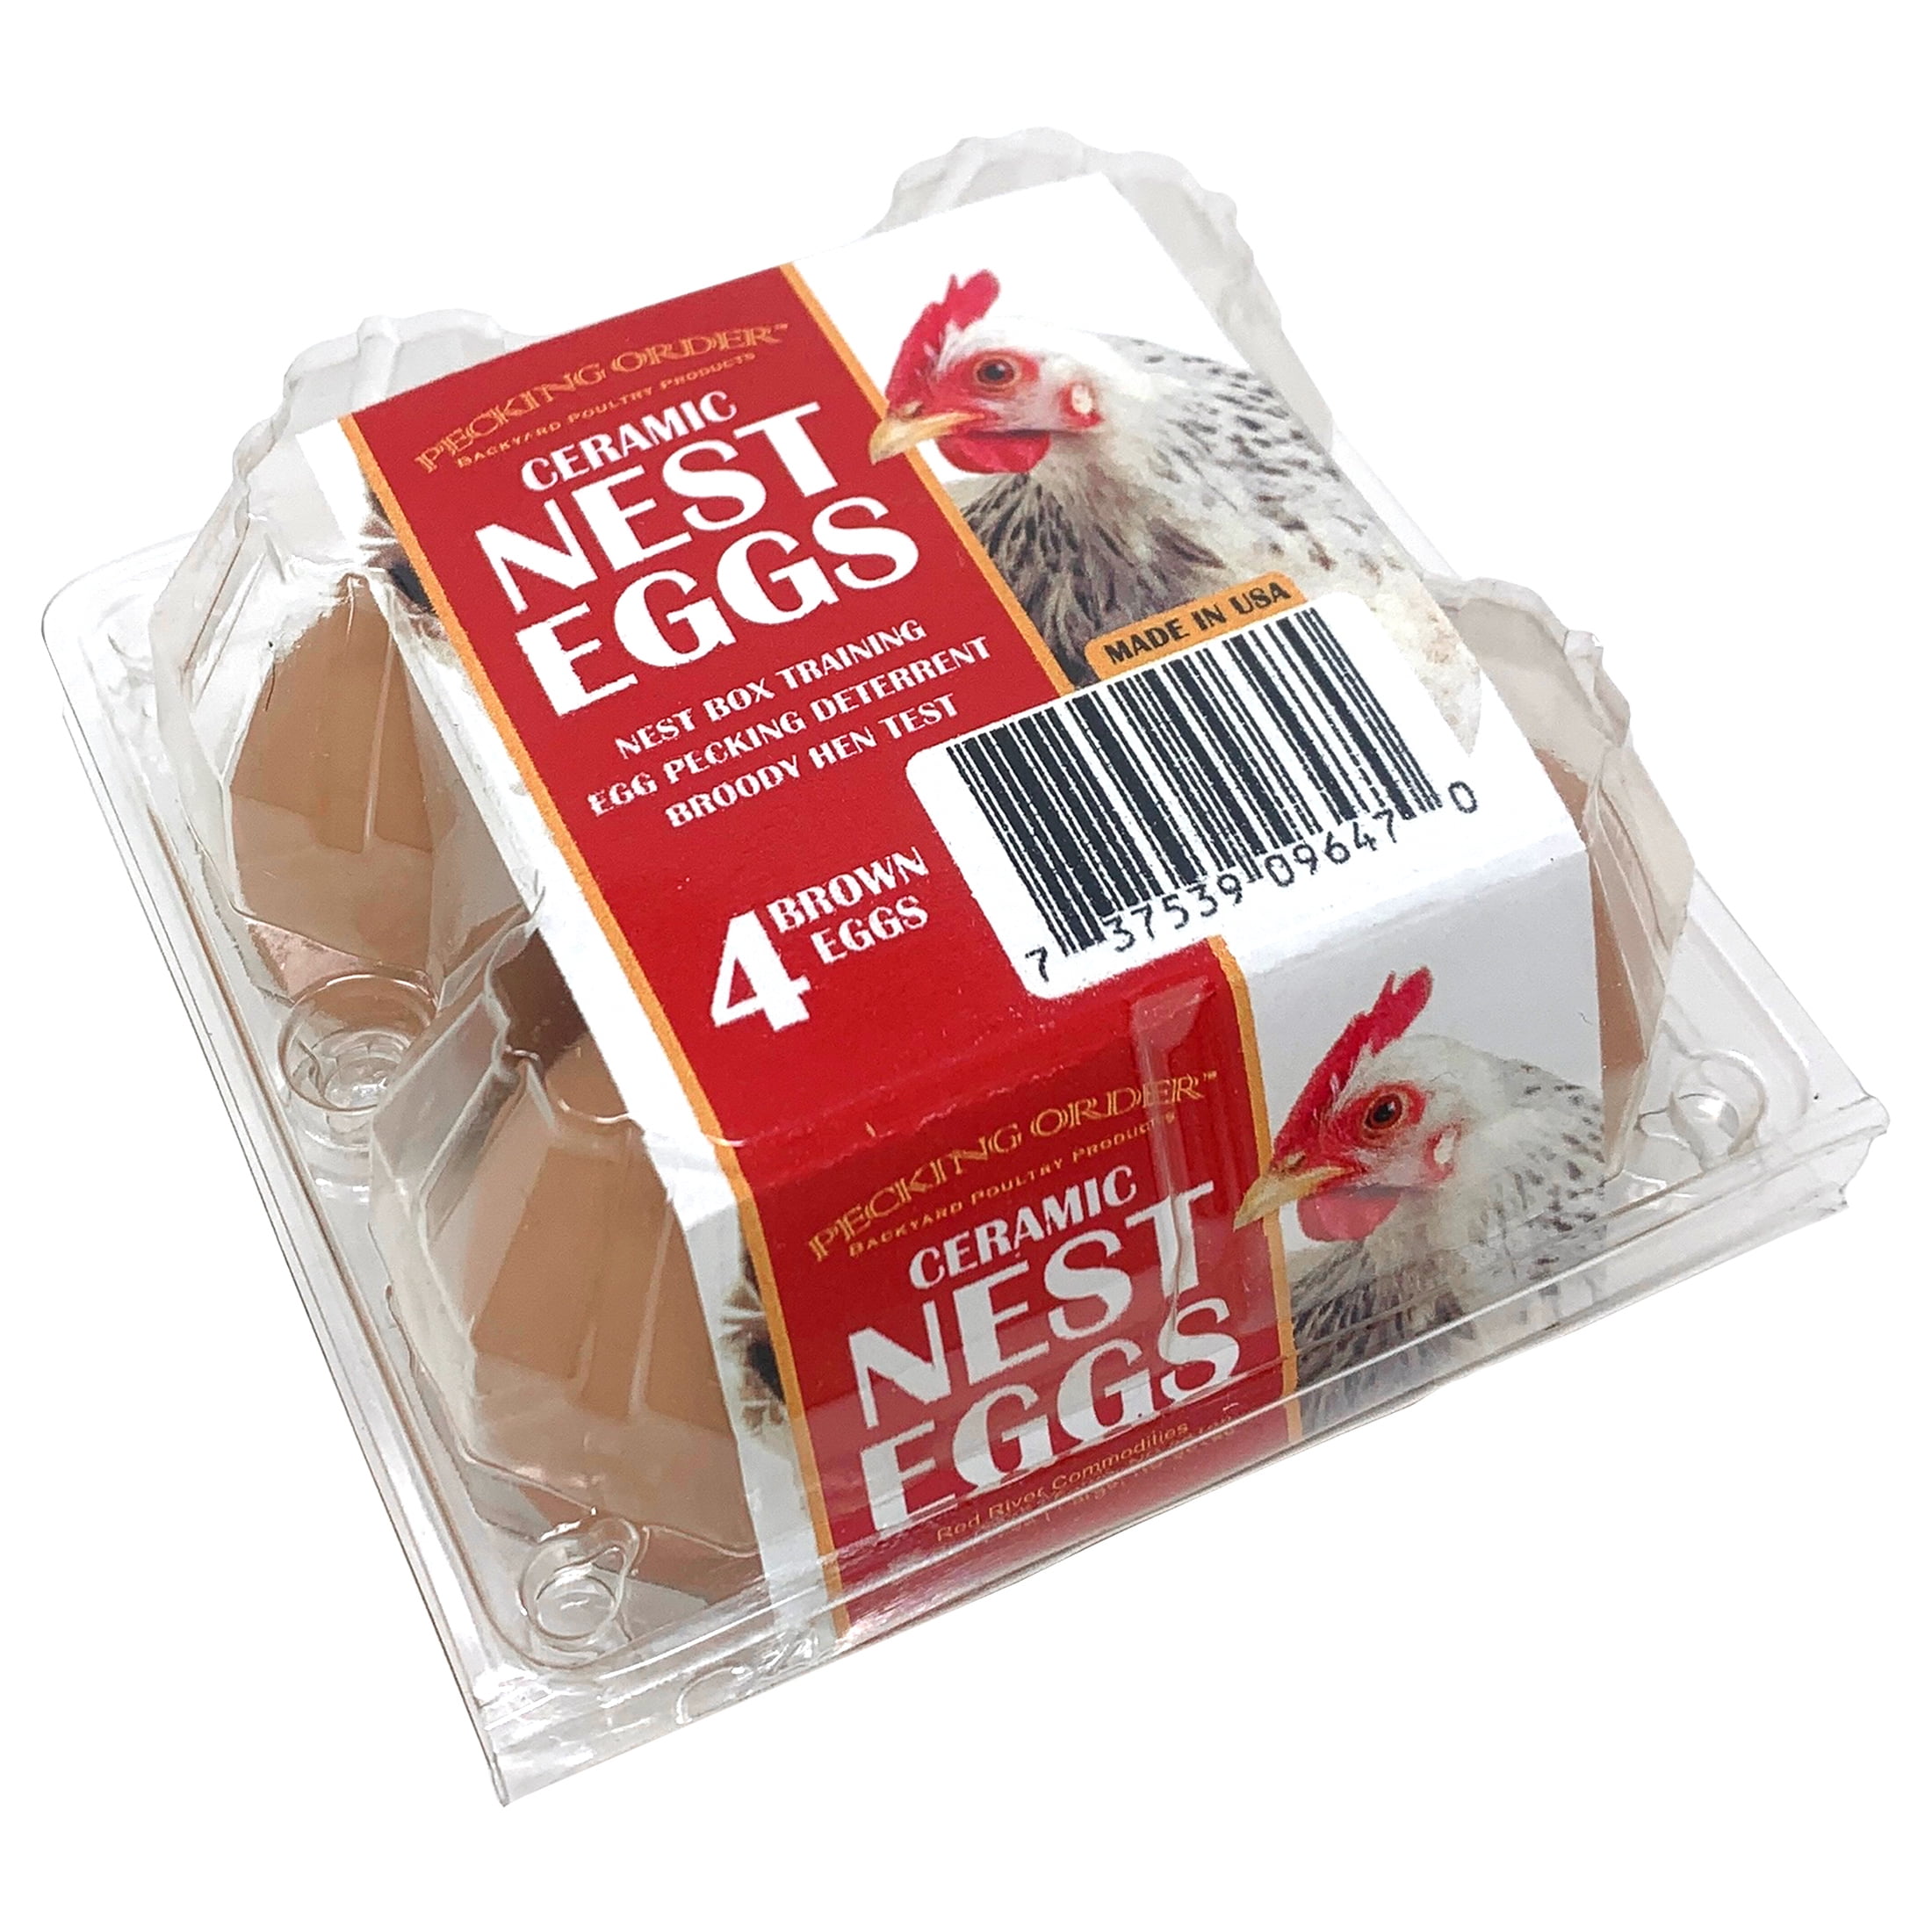 Pecking Order Ceramic Nest Eggs 4 Pack, for Chicken Coops